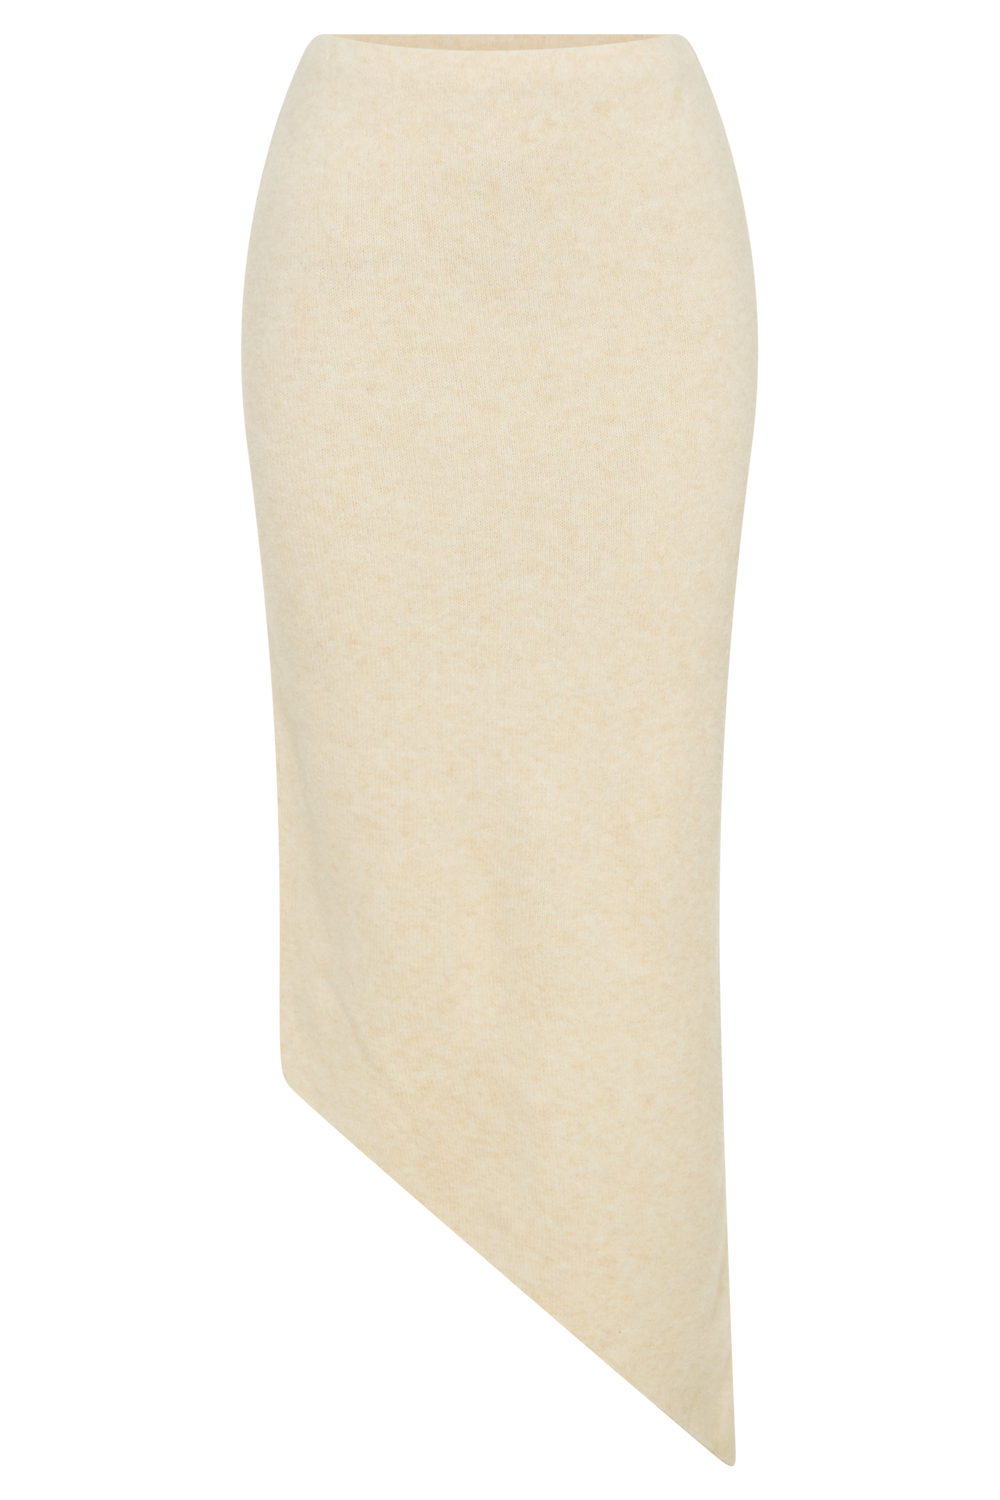 Genevieve Asymmetrical Knit Midi Skirt - Cream Marle